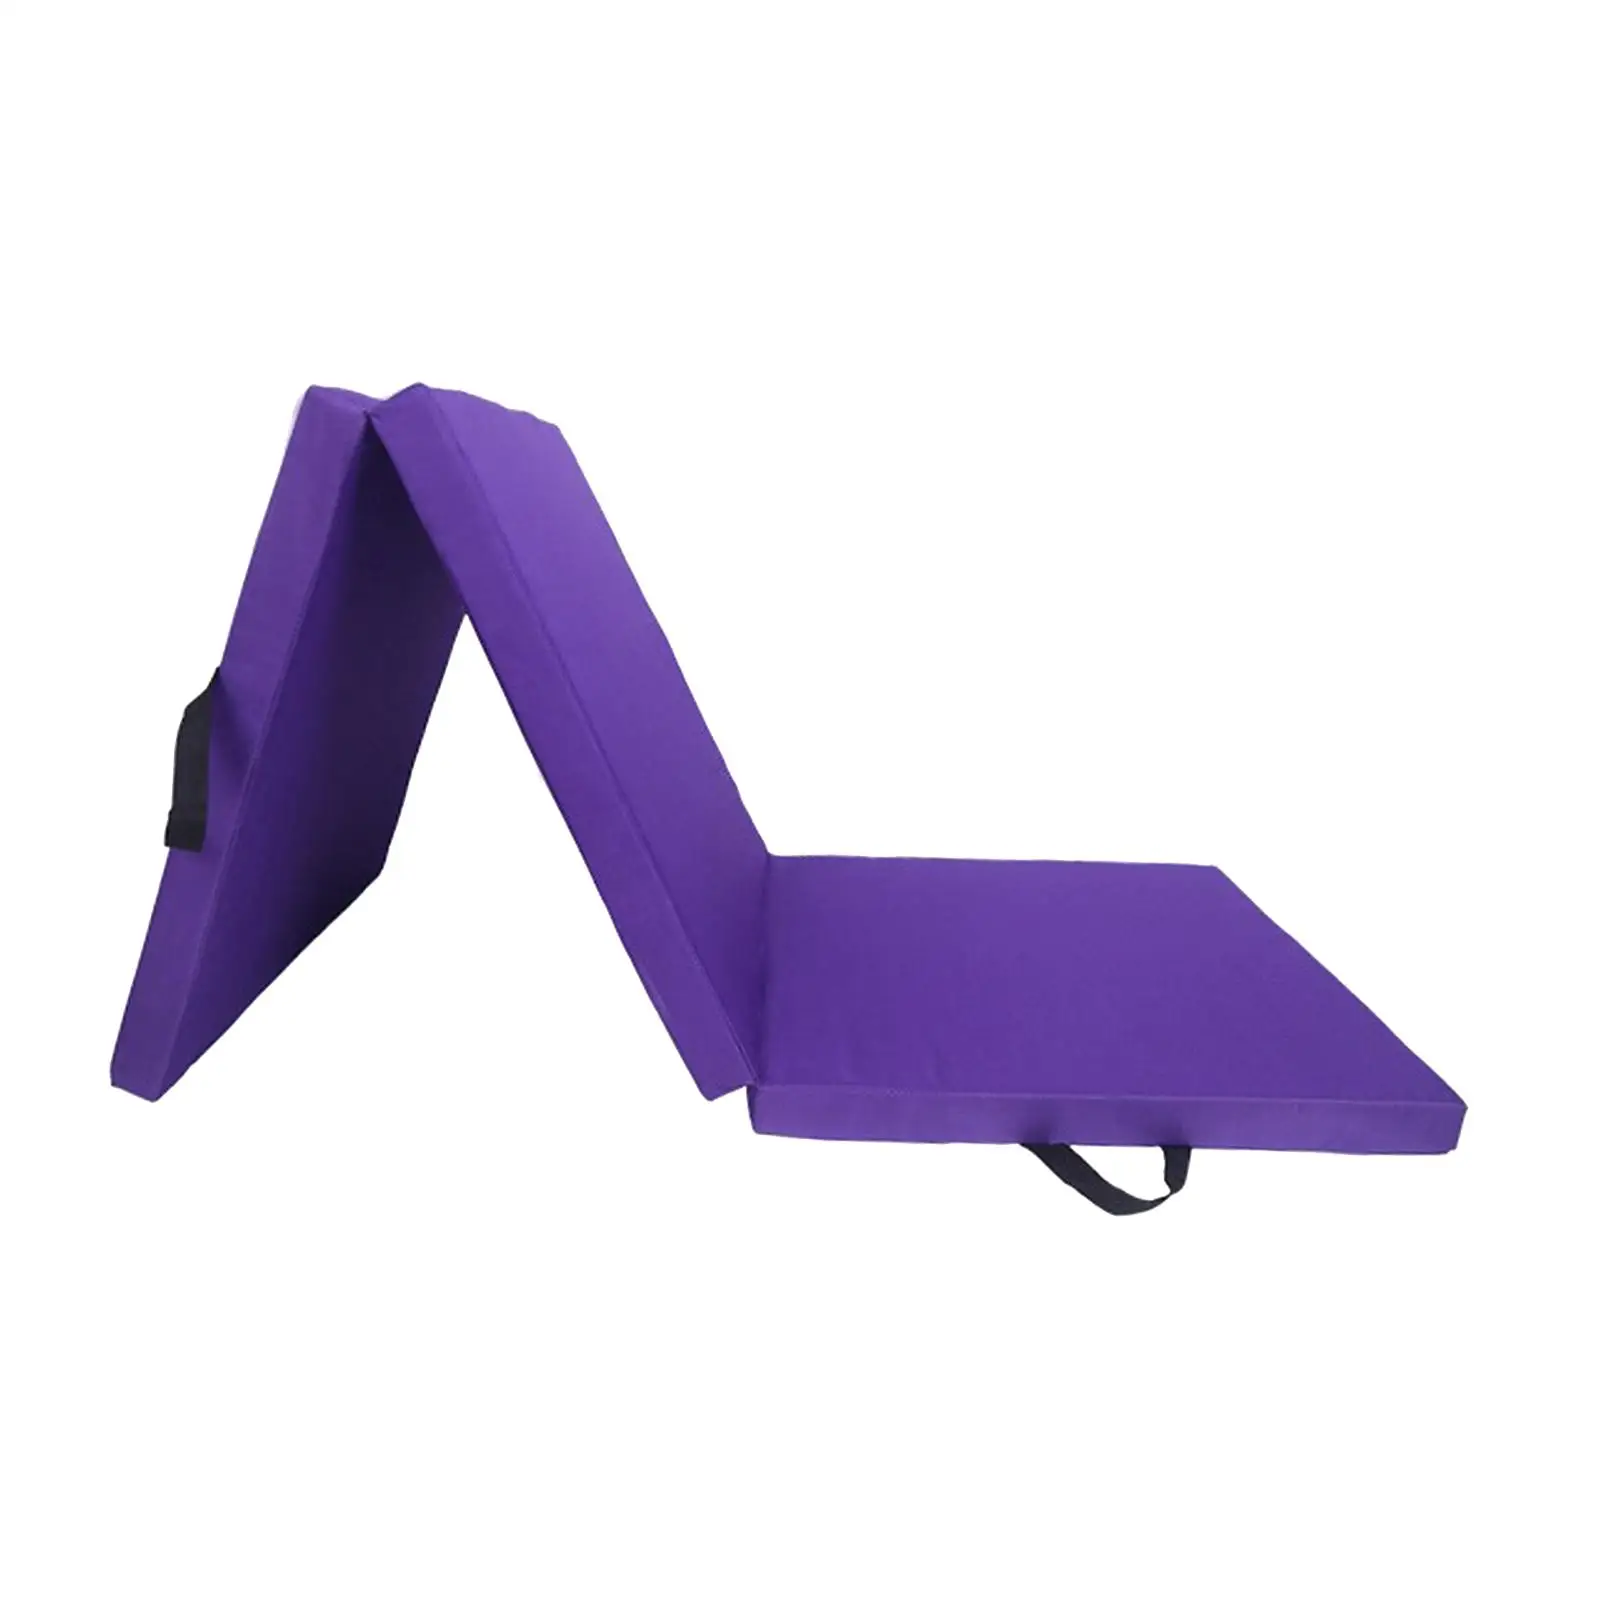 Folding Exercise Mat Thick Yoga Mat for Training Stretching Balance